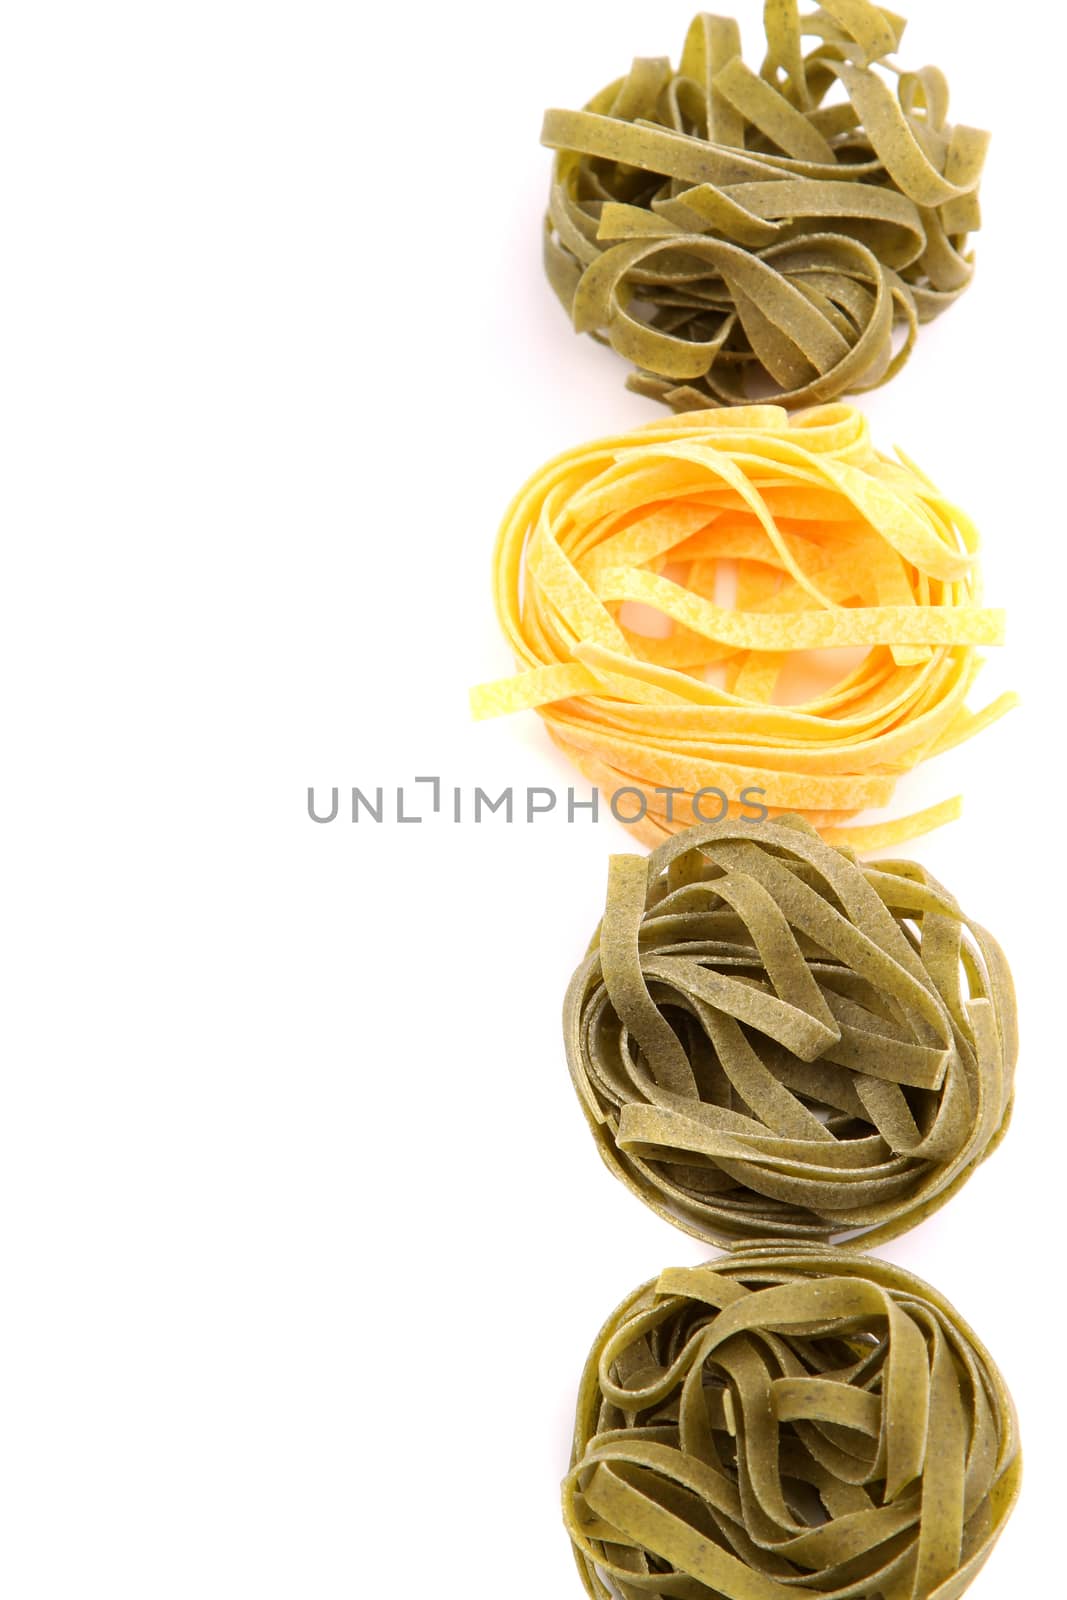 Tagliatelle paglia e fieno homemade tipycal italian pasta close-up. by indigolotos